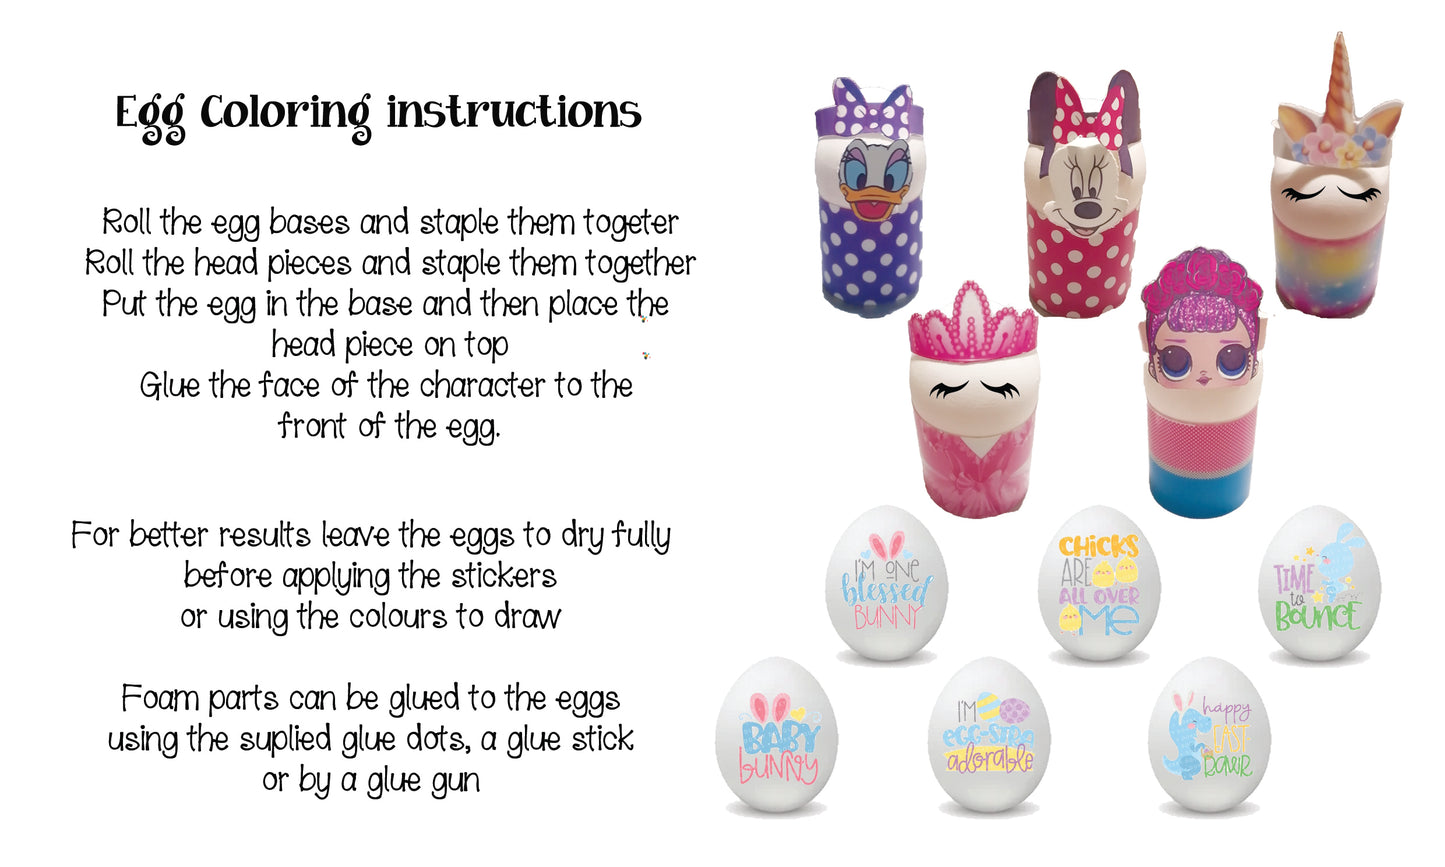 Egg colouring kit 9 (3D girls characters kit)